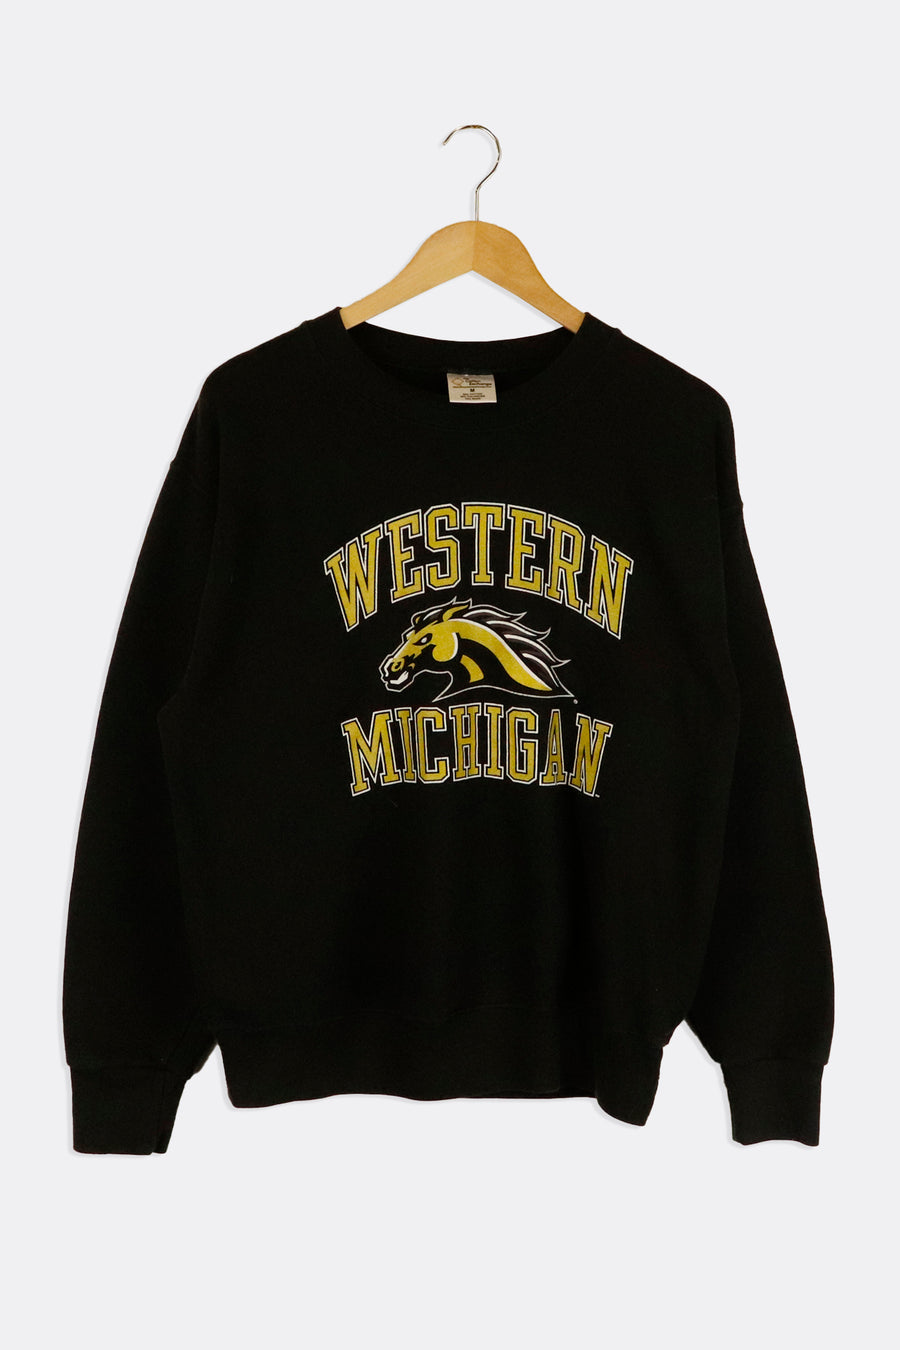 Vintage Western Michigan Gold Horse Mascot And Font Vinyl Sweatshirt Sz M